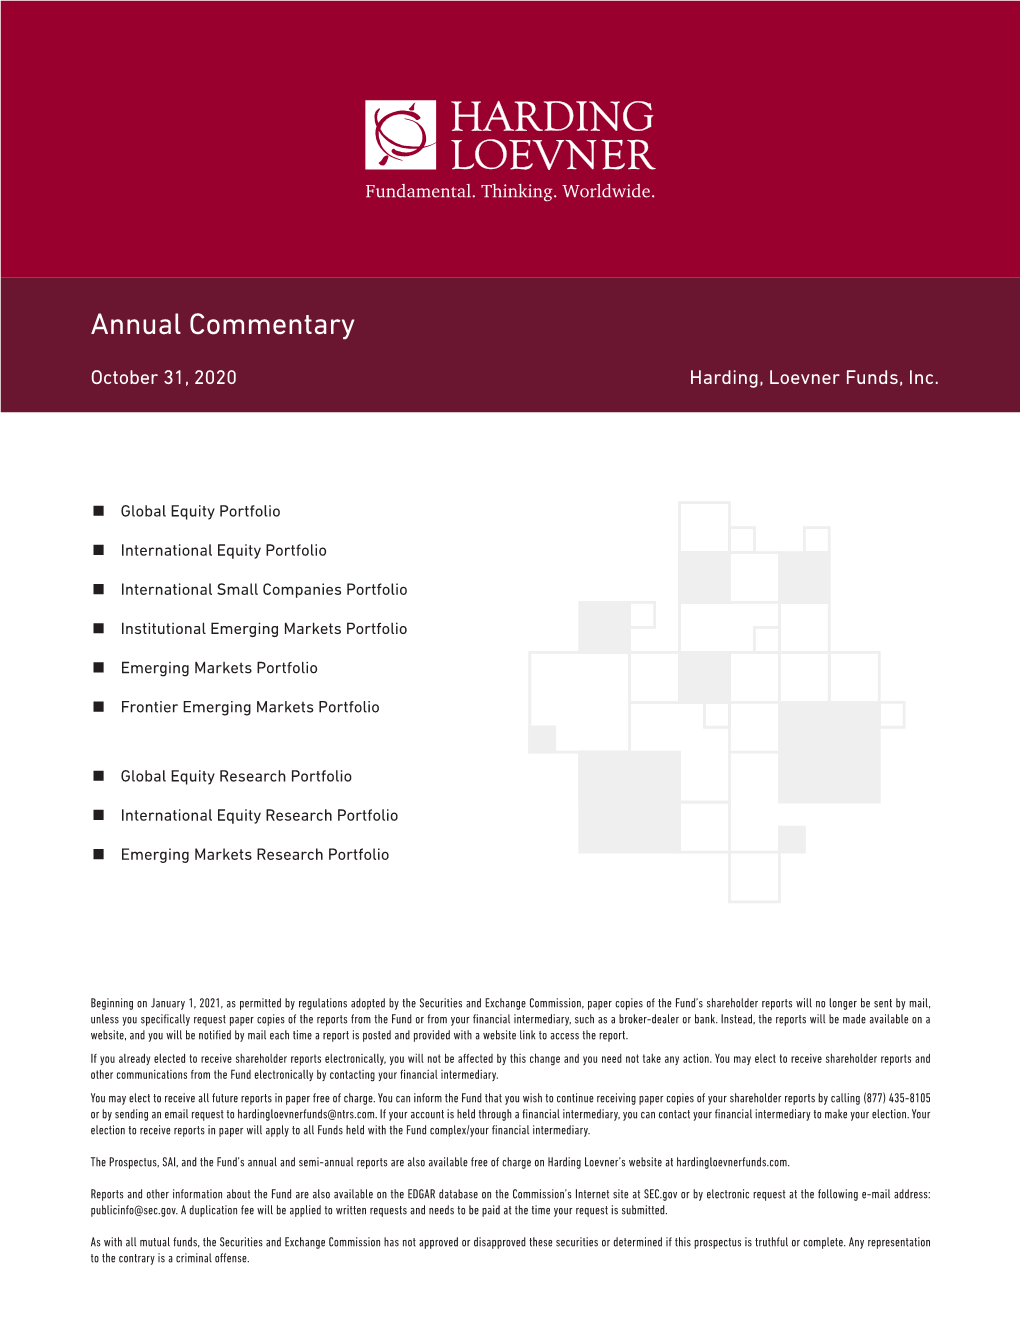 Harding, Loevner Funds, Inc. Annual Report 2020